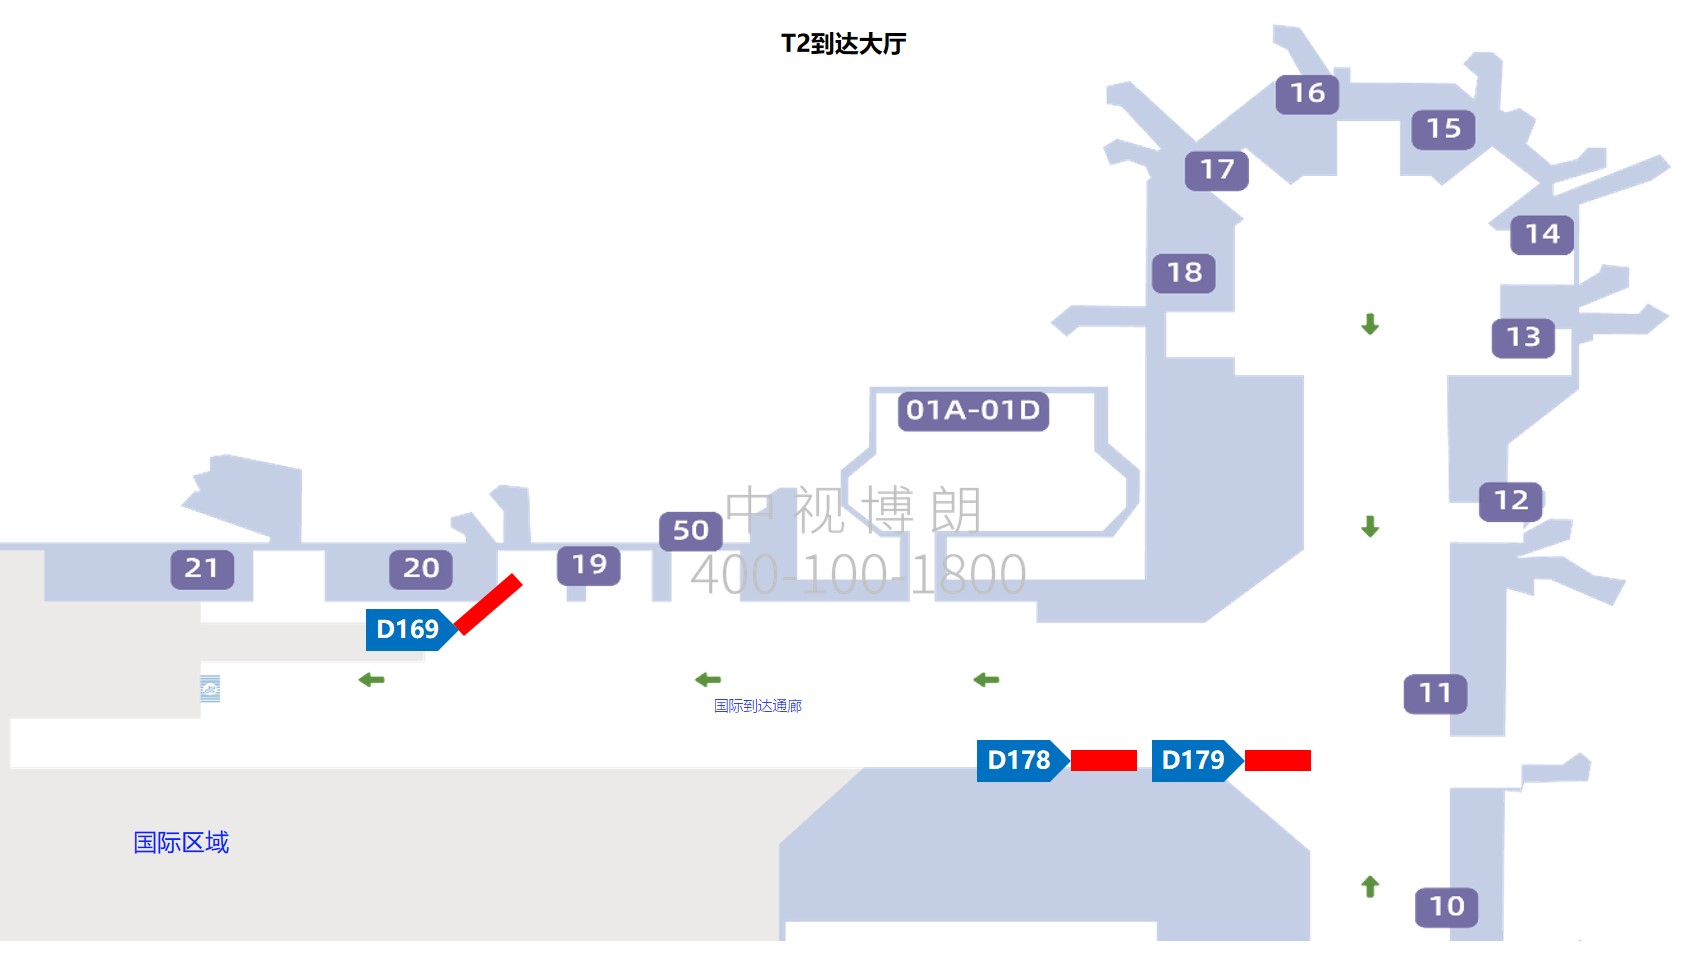 北京首都机场广告-T2 International Arrival Corridor Light Box Set 1位置图